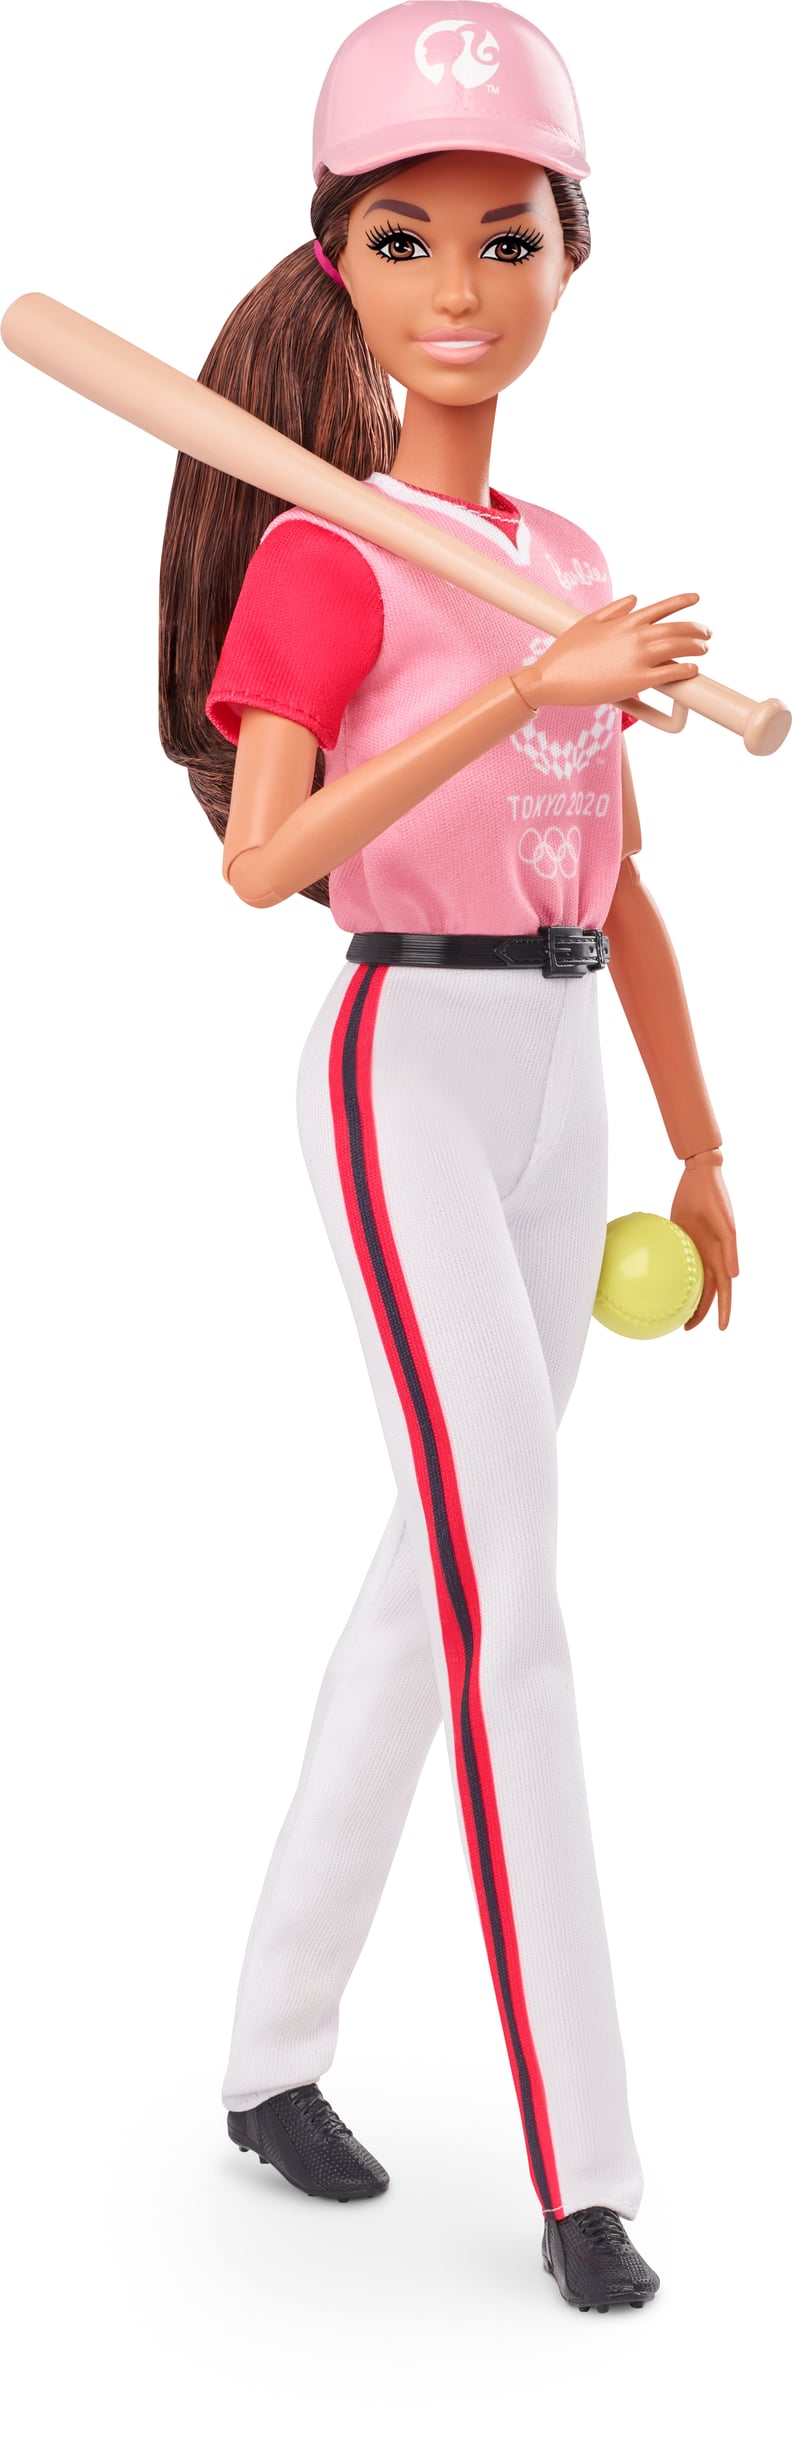 Summer Olympics 2020 Softball Player Barbie